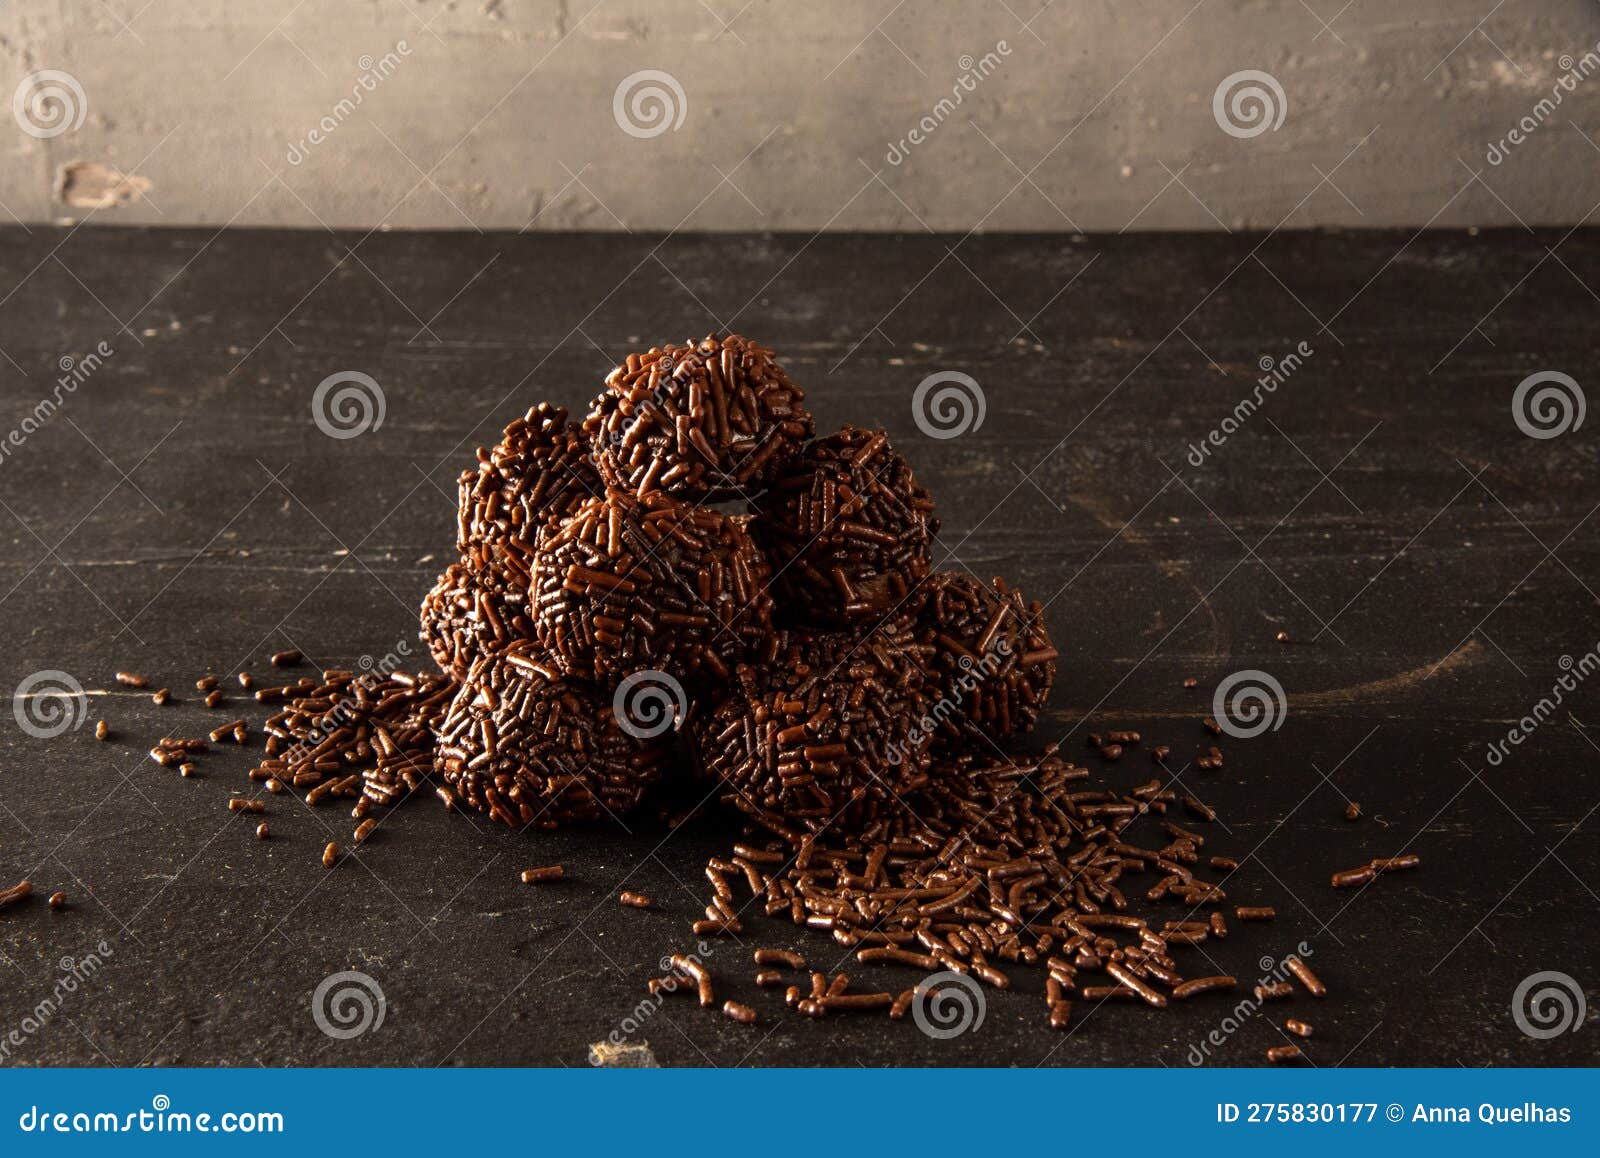 brigadeiro (brigadeiro) traditional brazilian sweet. chocolate candies on dark background